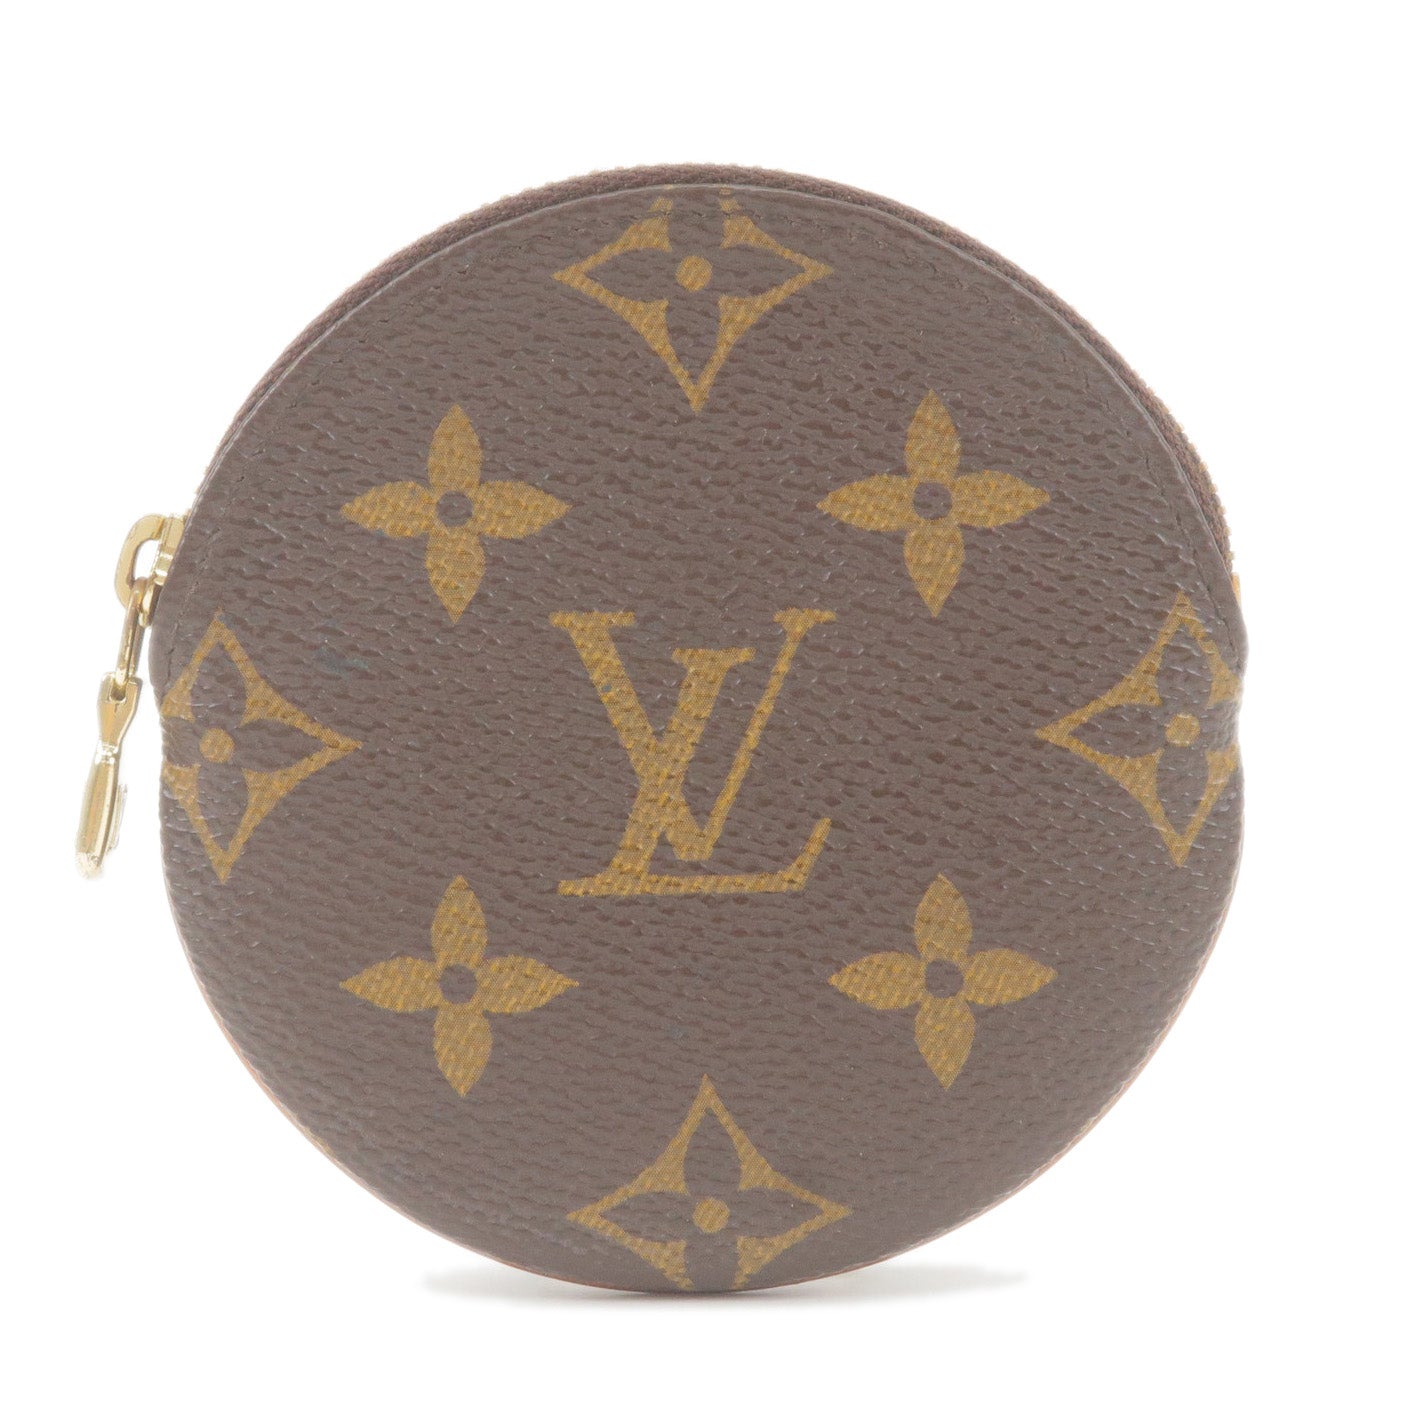 Torba Louis Vuitton Voyage Baggage Fees